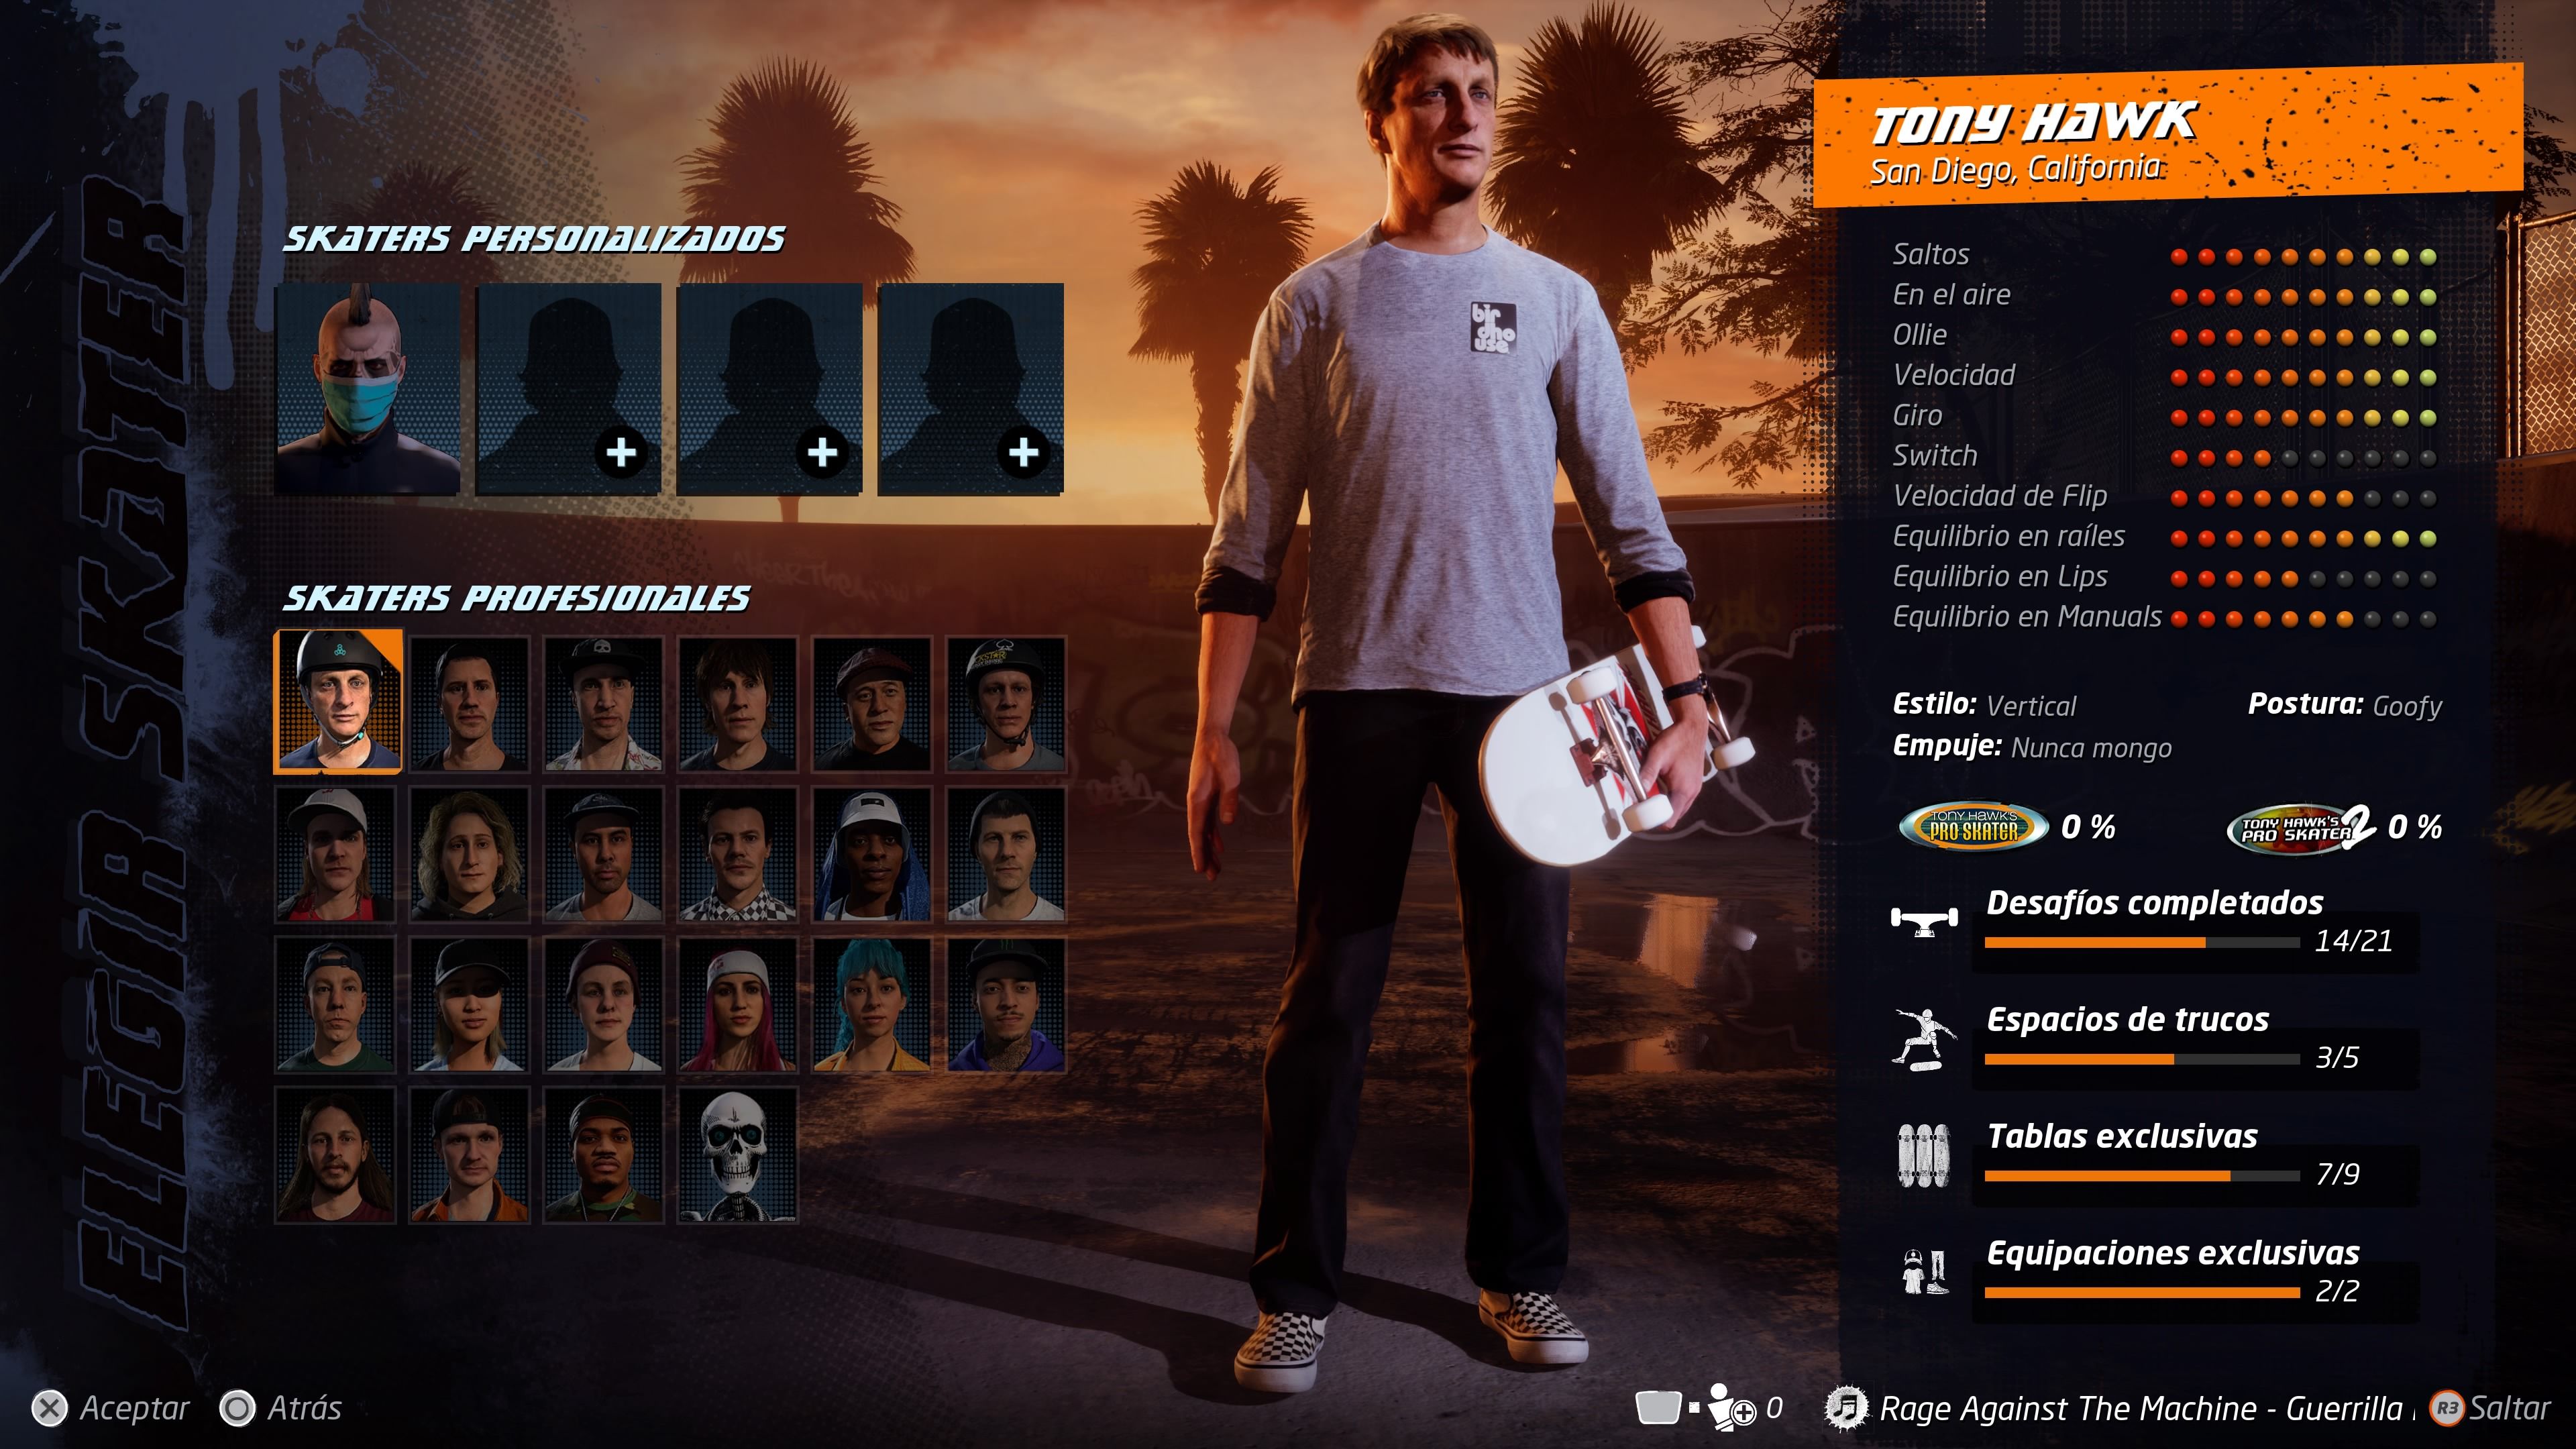 Análisis Tony Hawk's Pro Skater 1 + 2 para PS5 y Xbox Series X|S